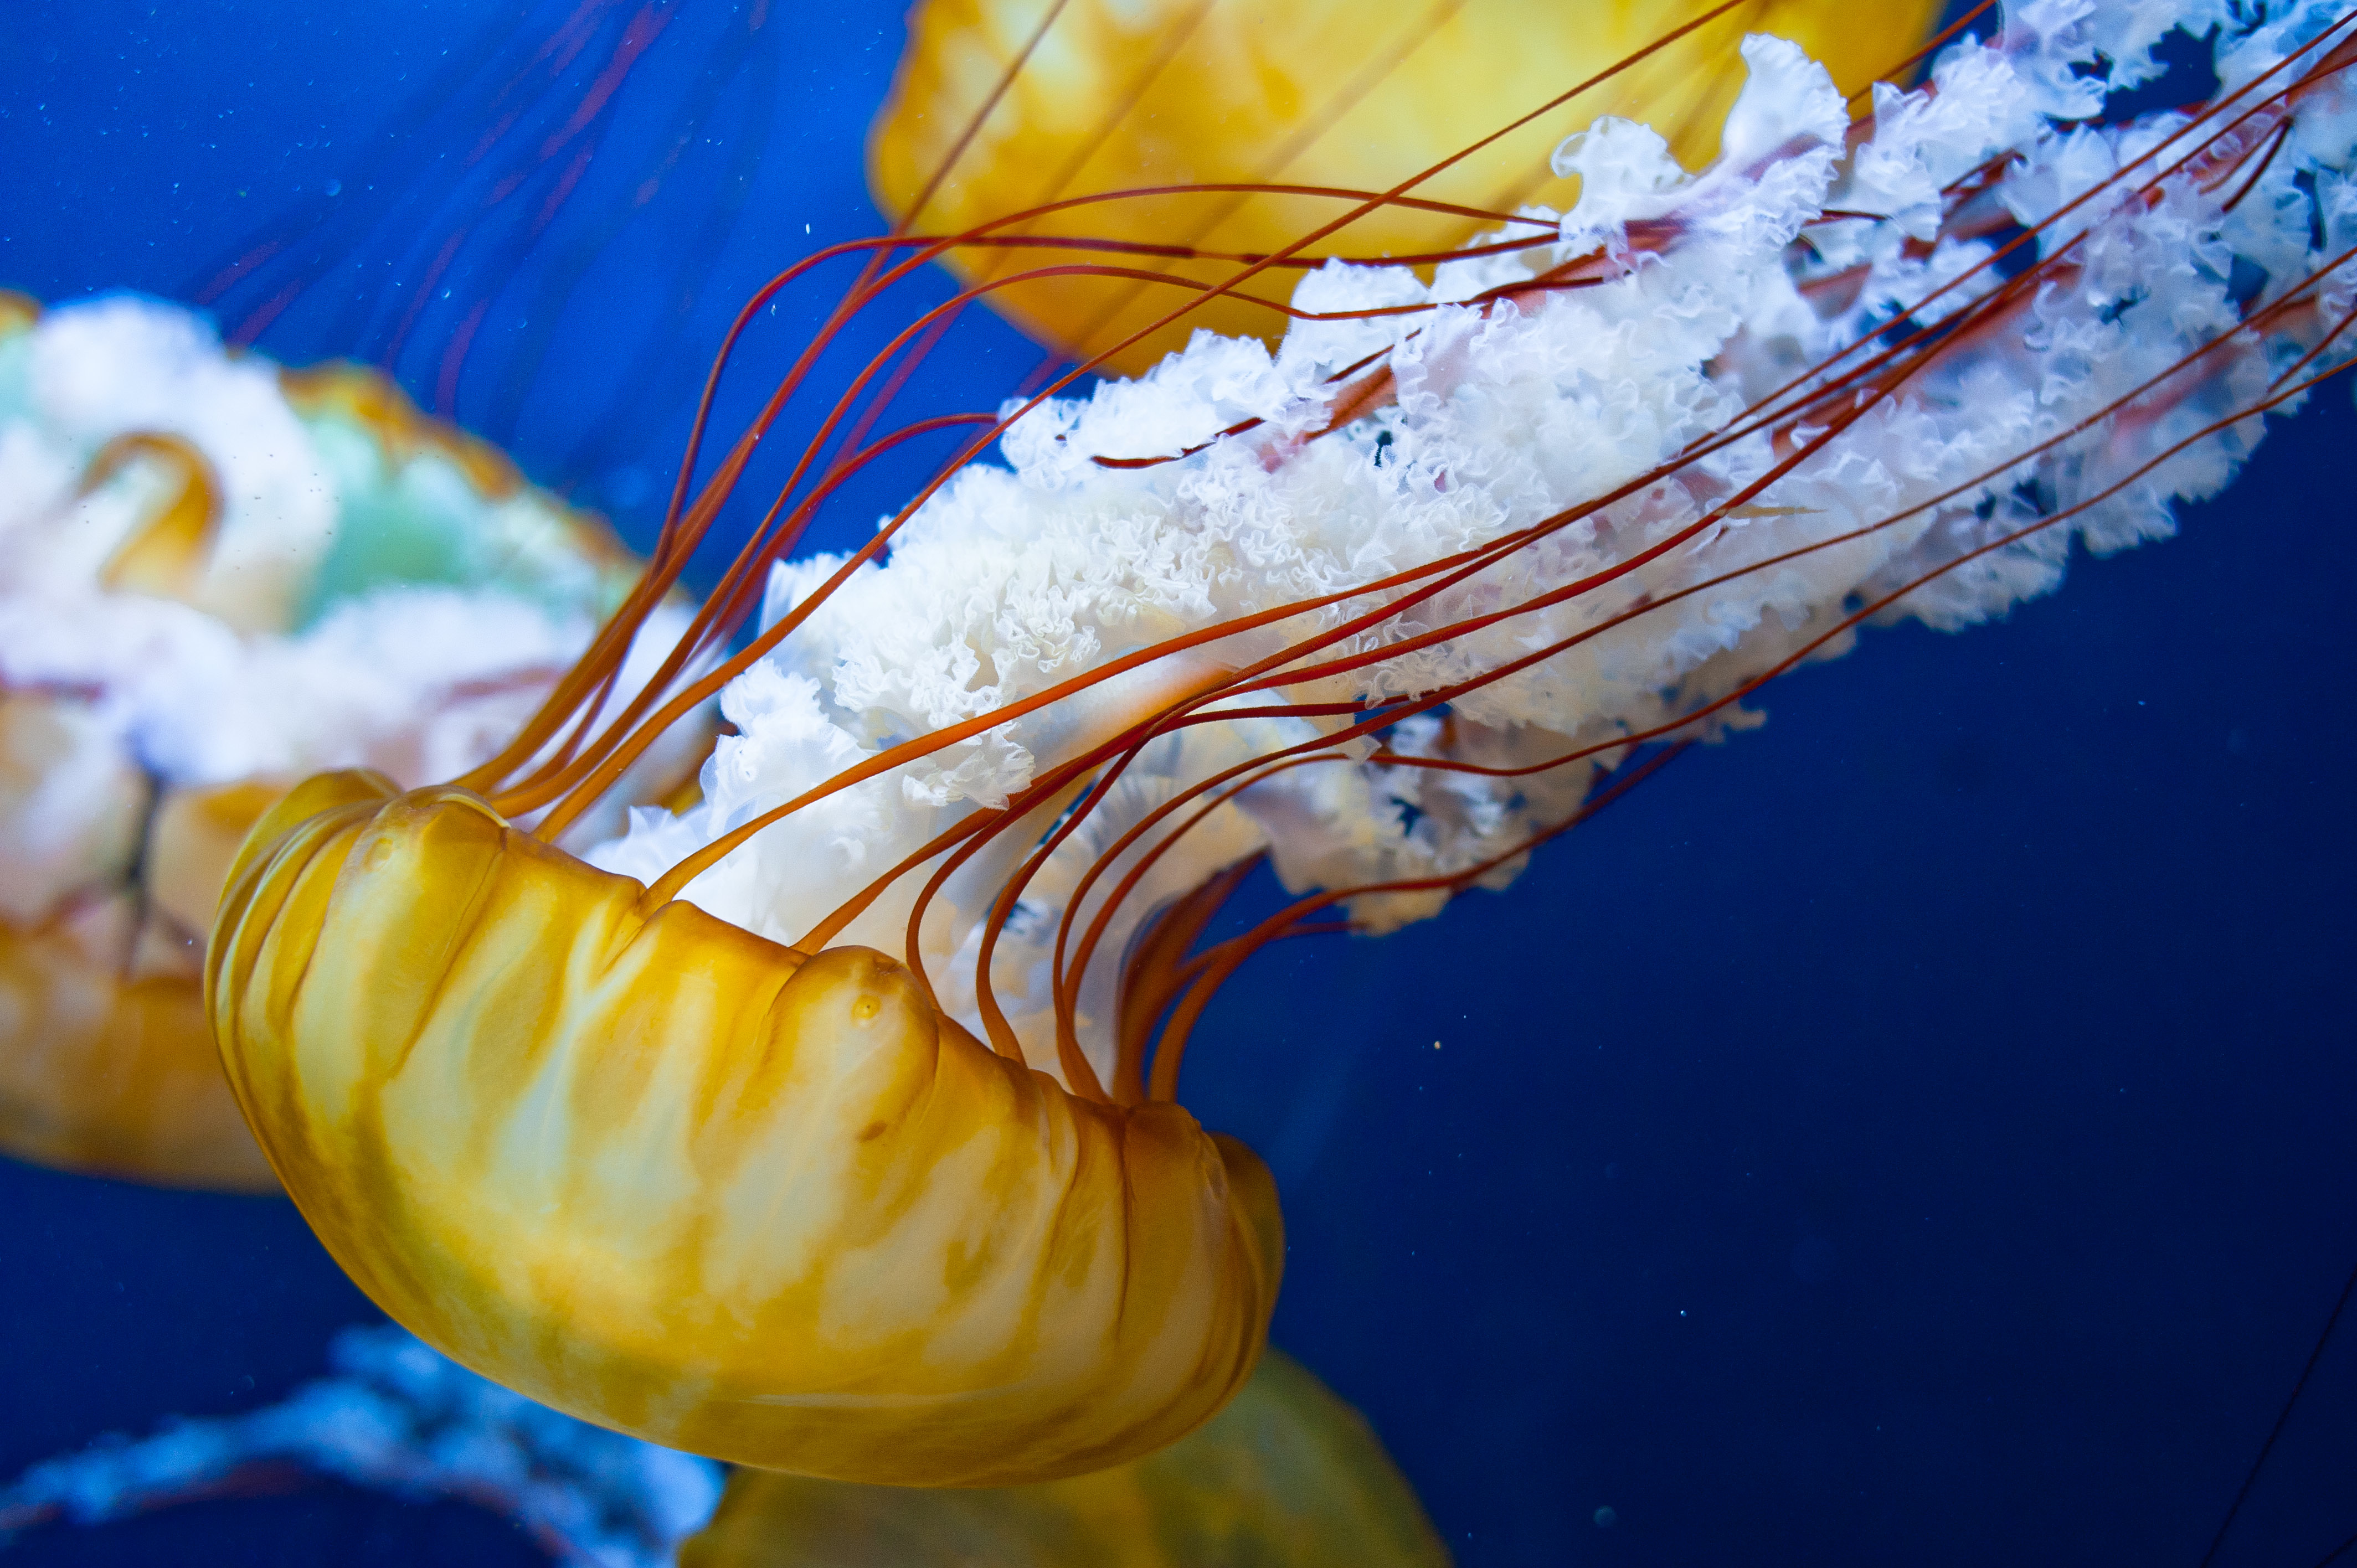 Jellyfish venom capsule length association with pain